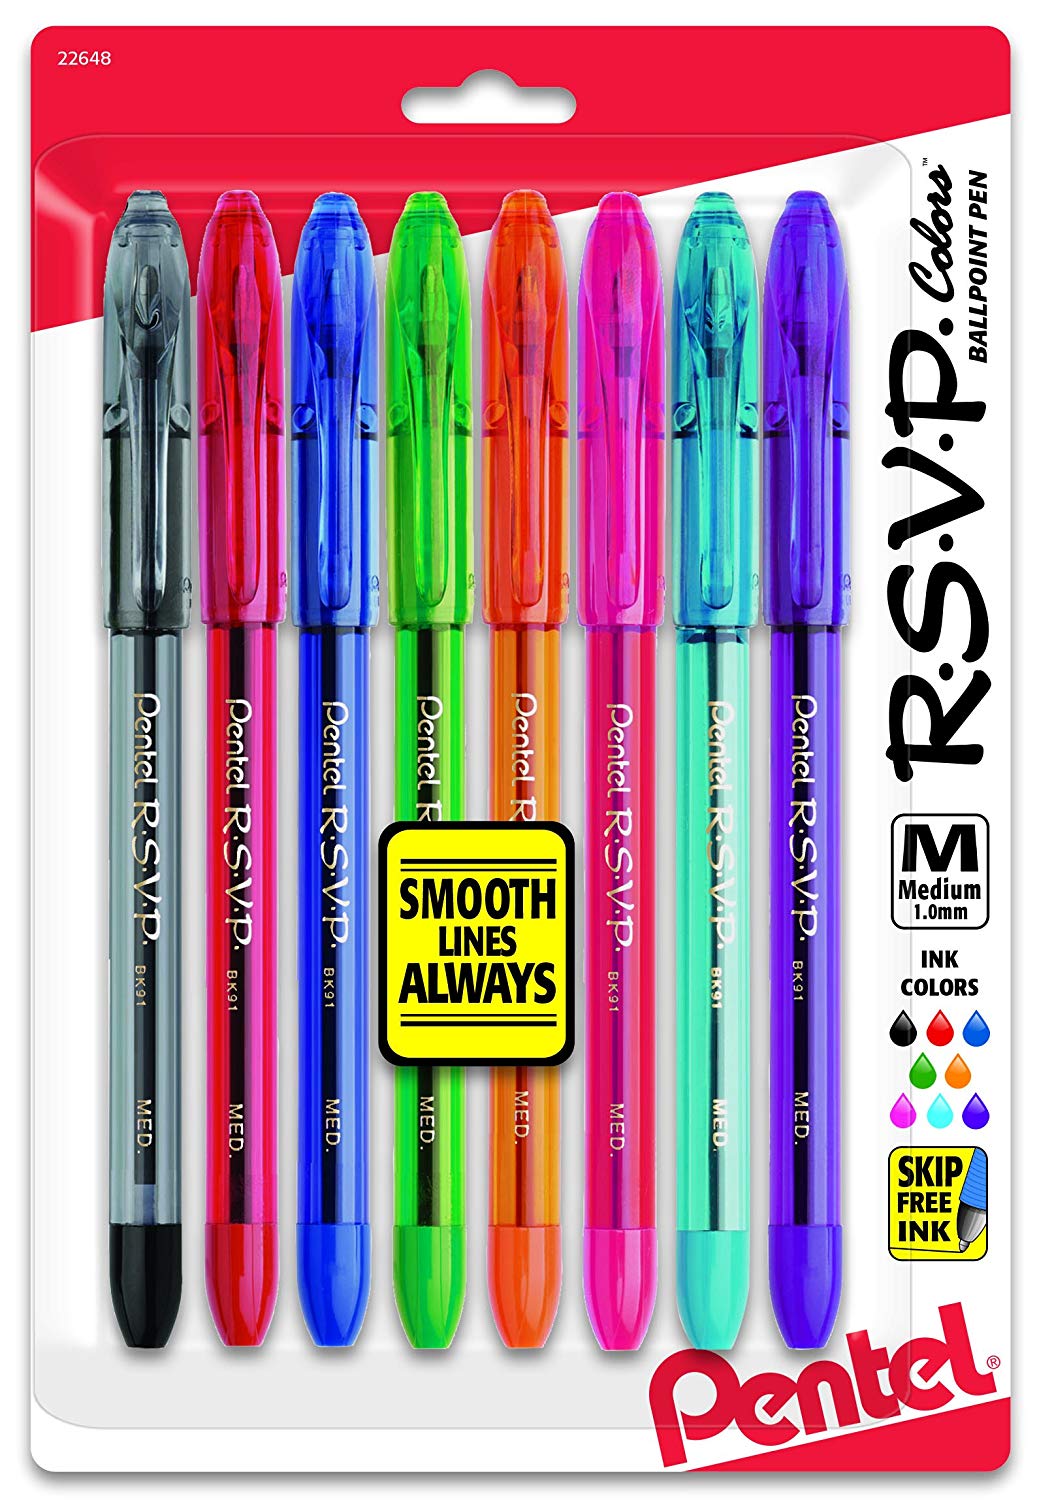 Pentel 1.0mm RSVP Ballpoint Pen Medium Point Assorted Ink Colors - Pack of 8 Pens (BK91CRBP8M)